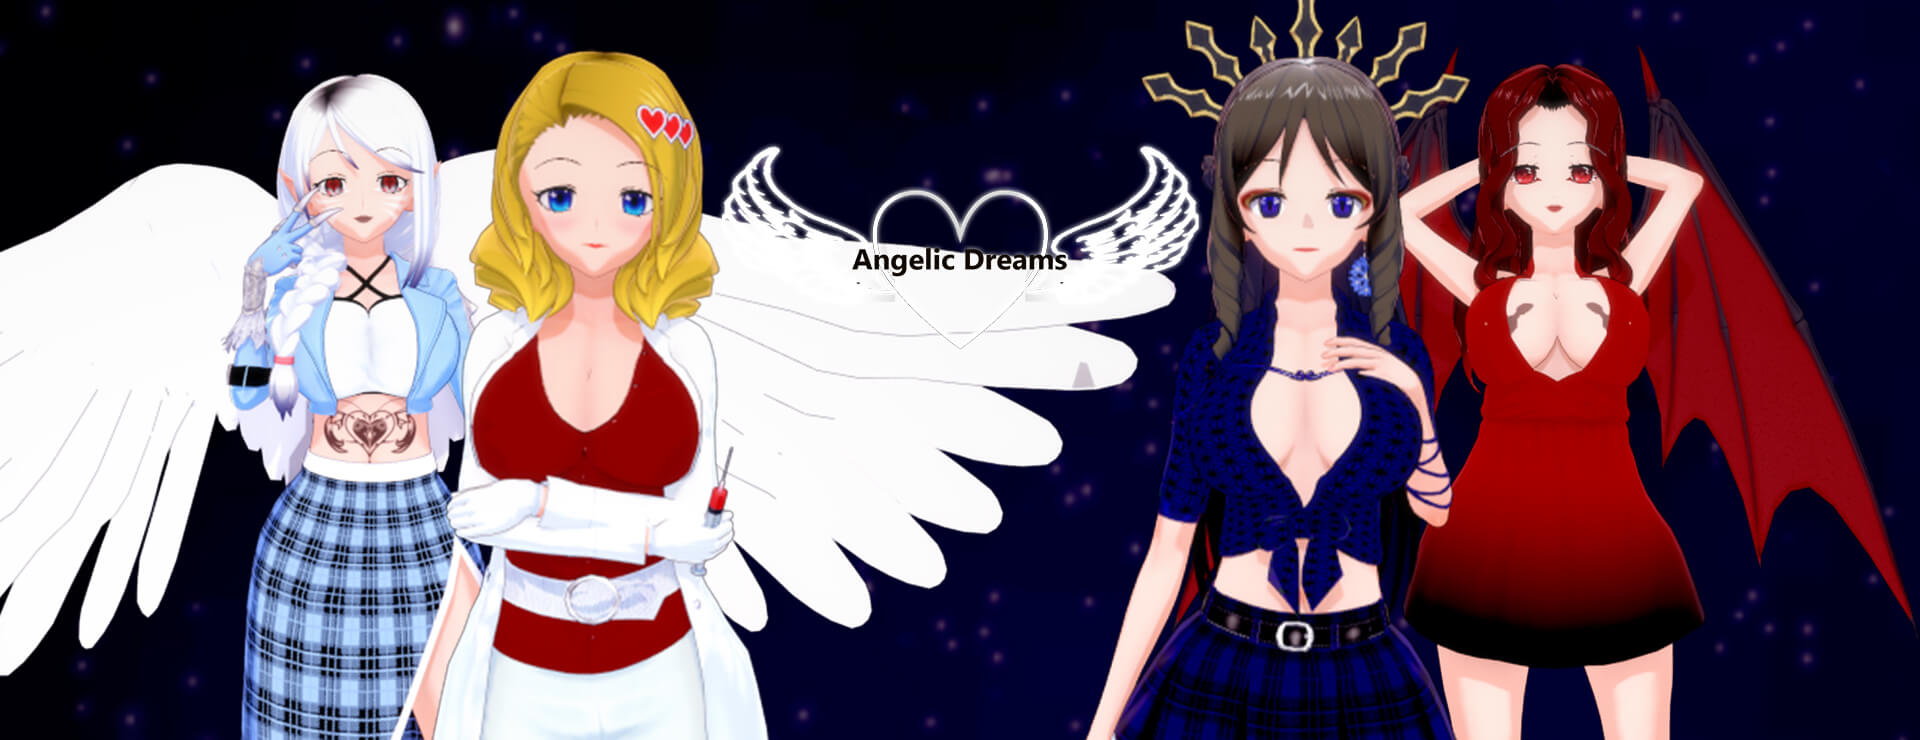 Angelic Dreams - ビジュアルノベル ゲーム